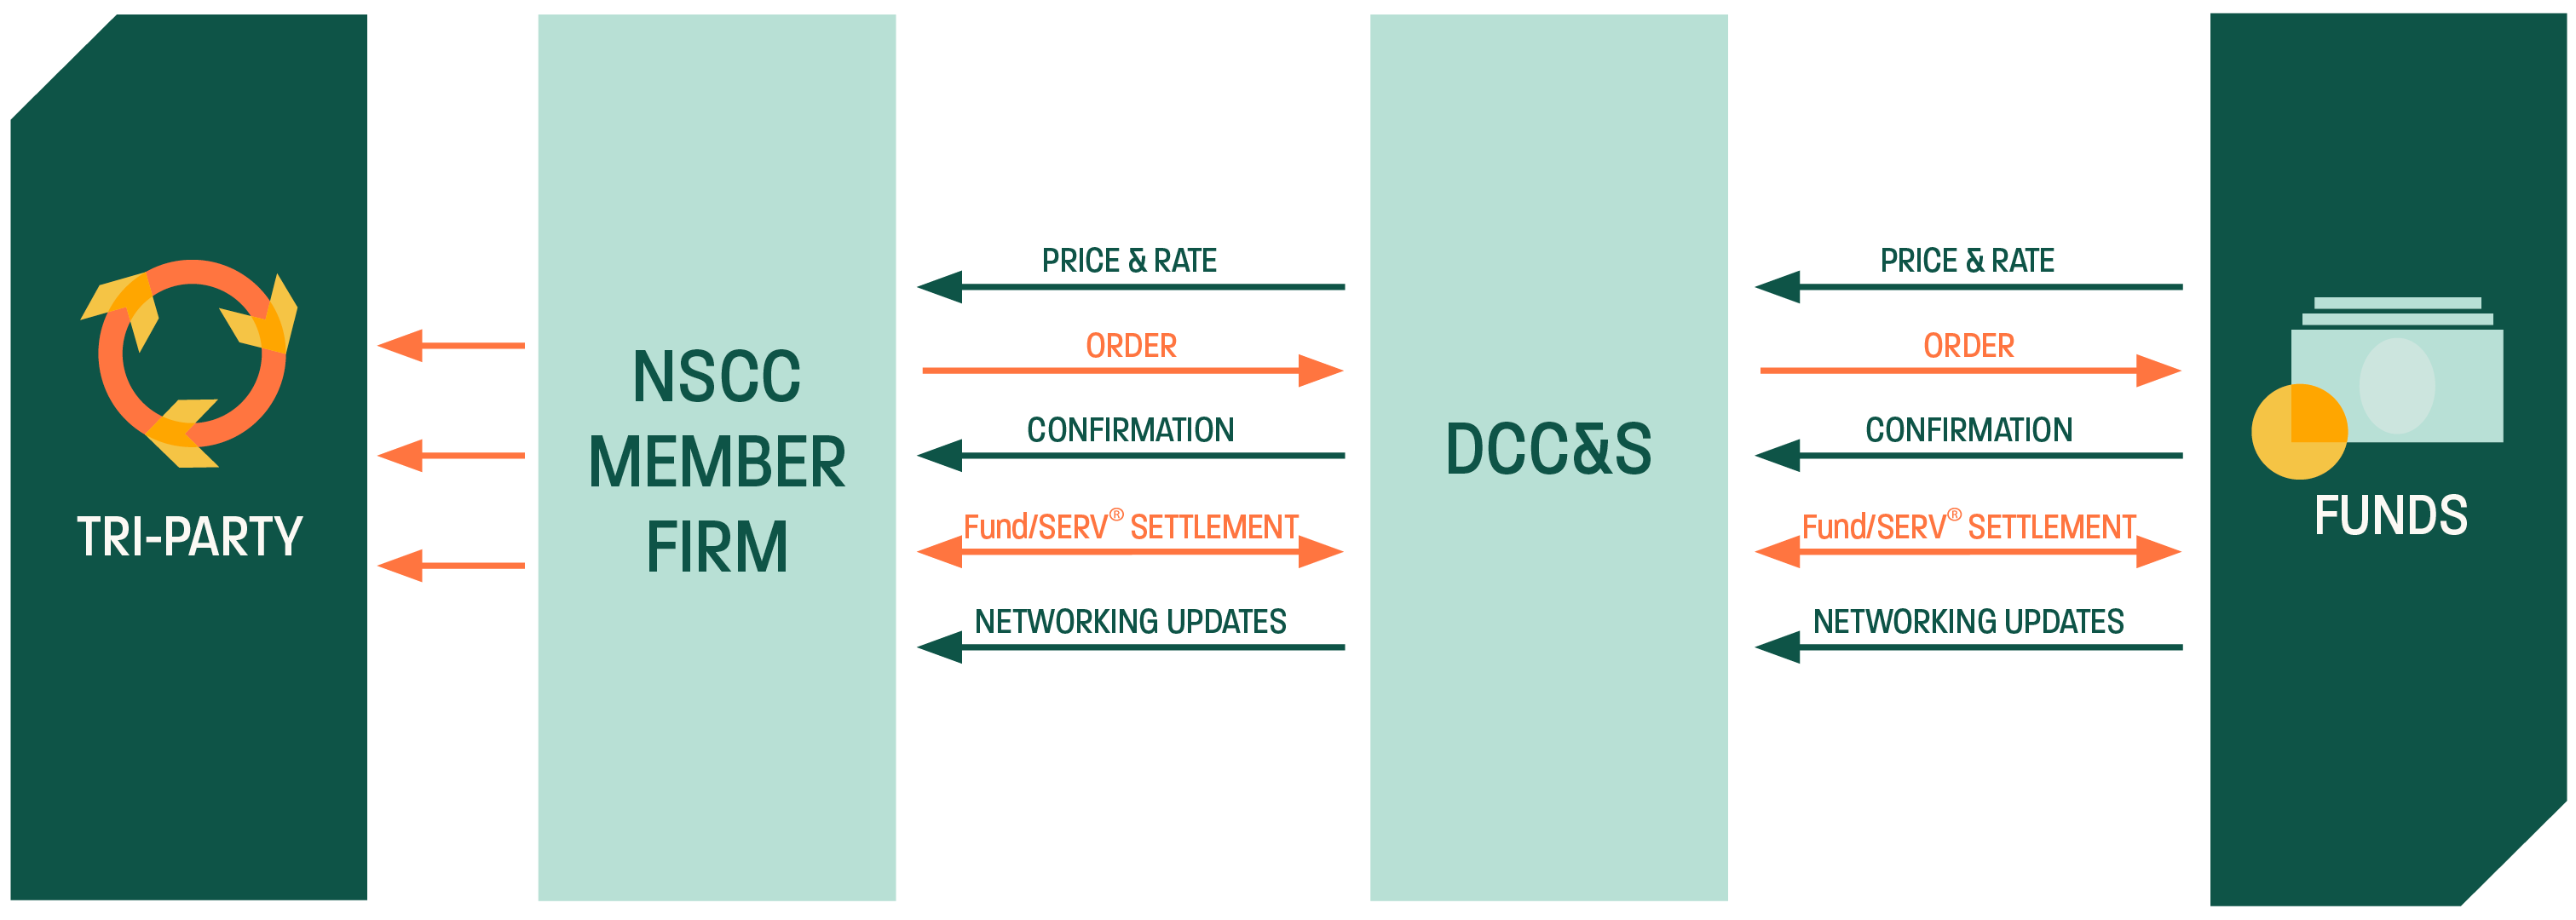 DCC's Schematic